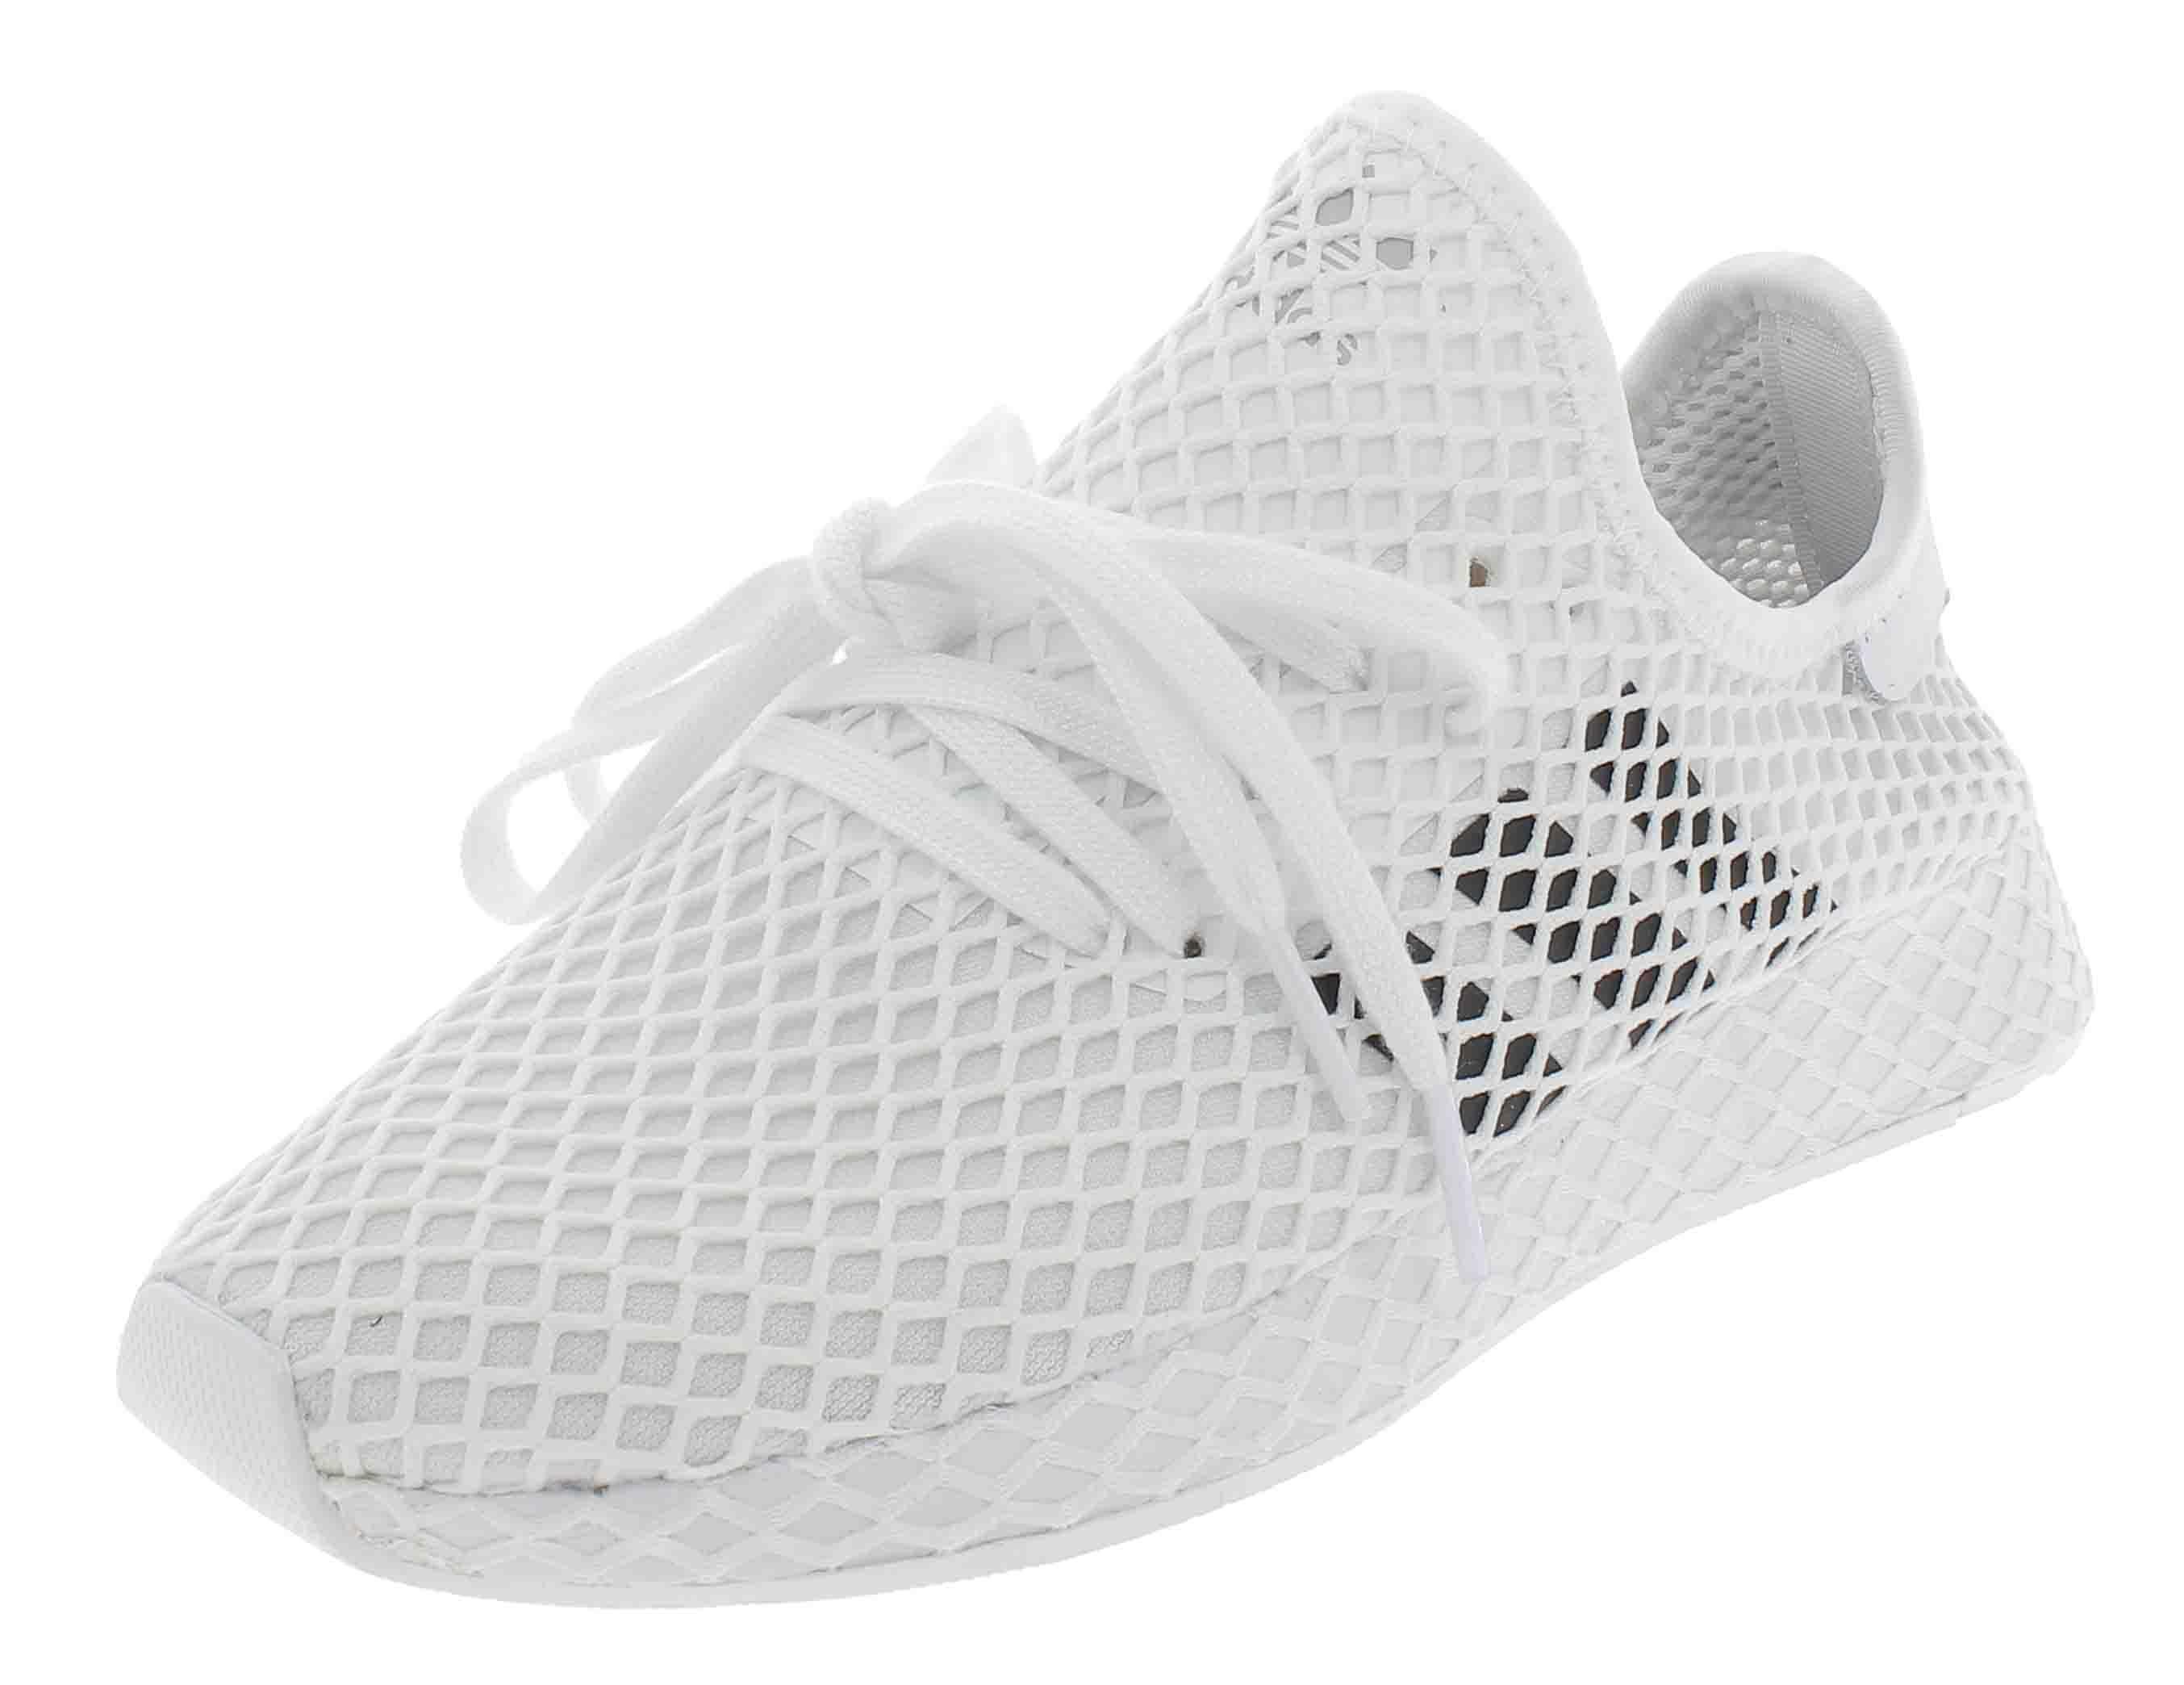 Adidas deerupt runner scarpe sportive uomo bianche da8871